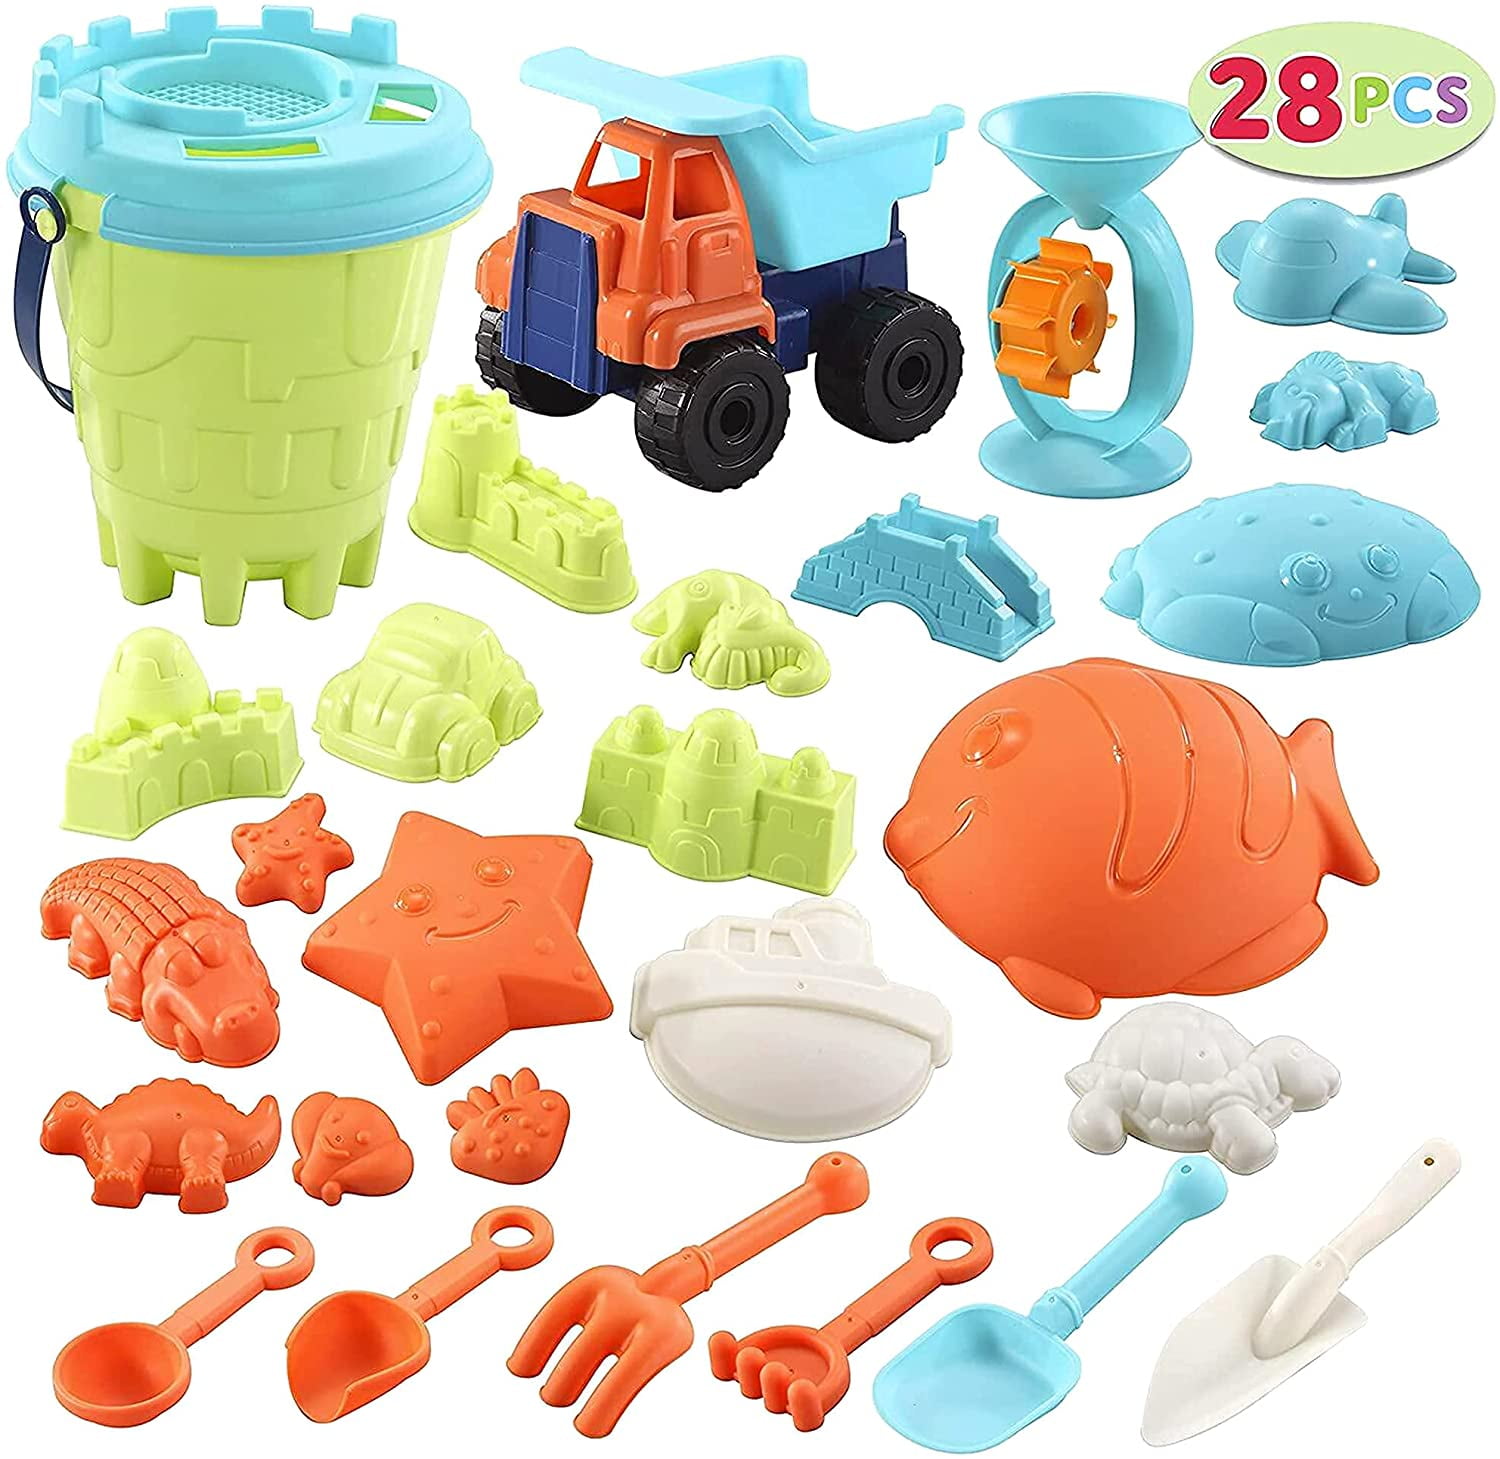 Details about   JOYIN 18 Pcs Beach Sand Toys Set with Mesh Bag Ice Cream for Kids,... 